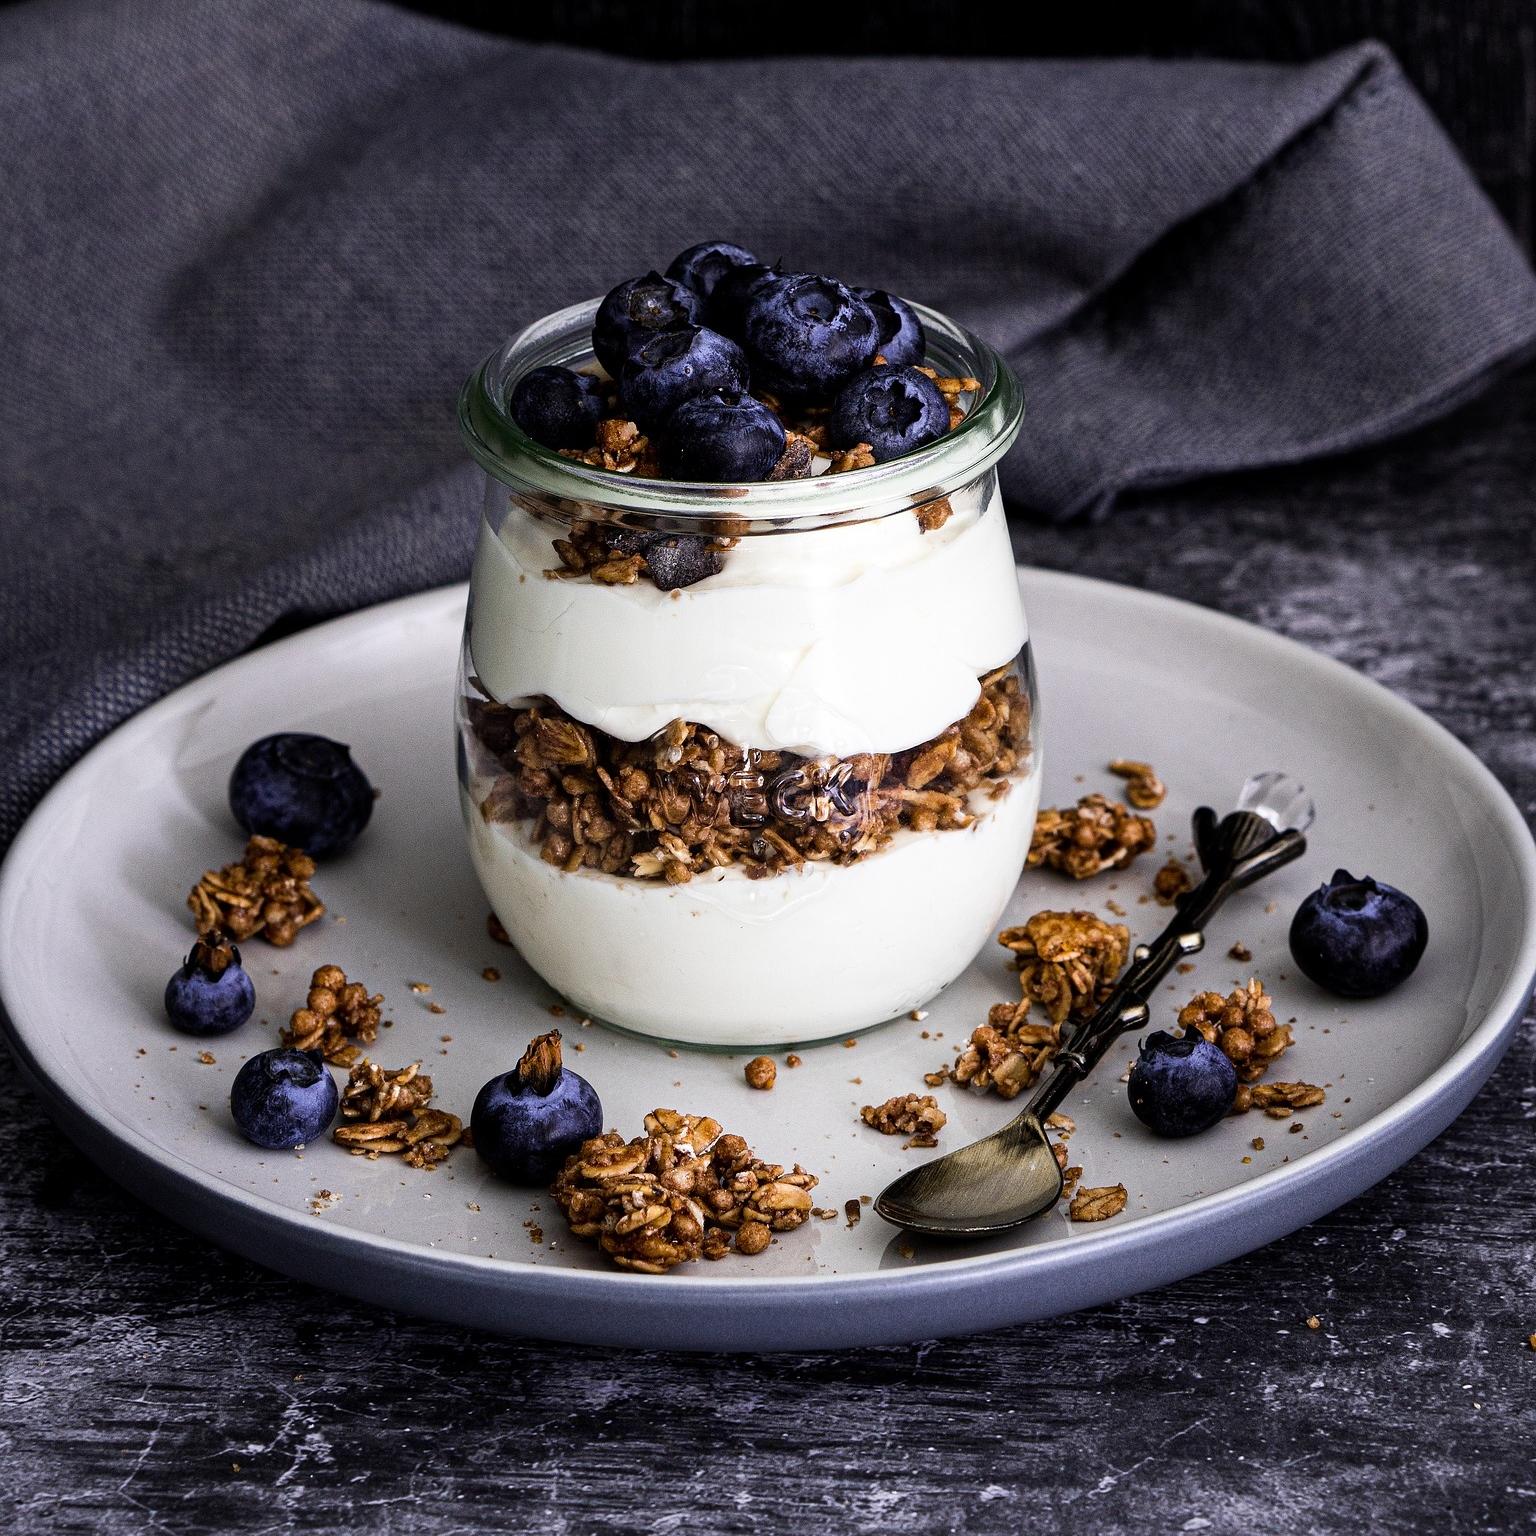 A jar of natural yogurt with muesli and blueberries